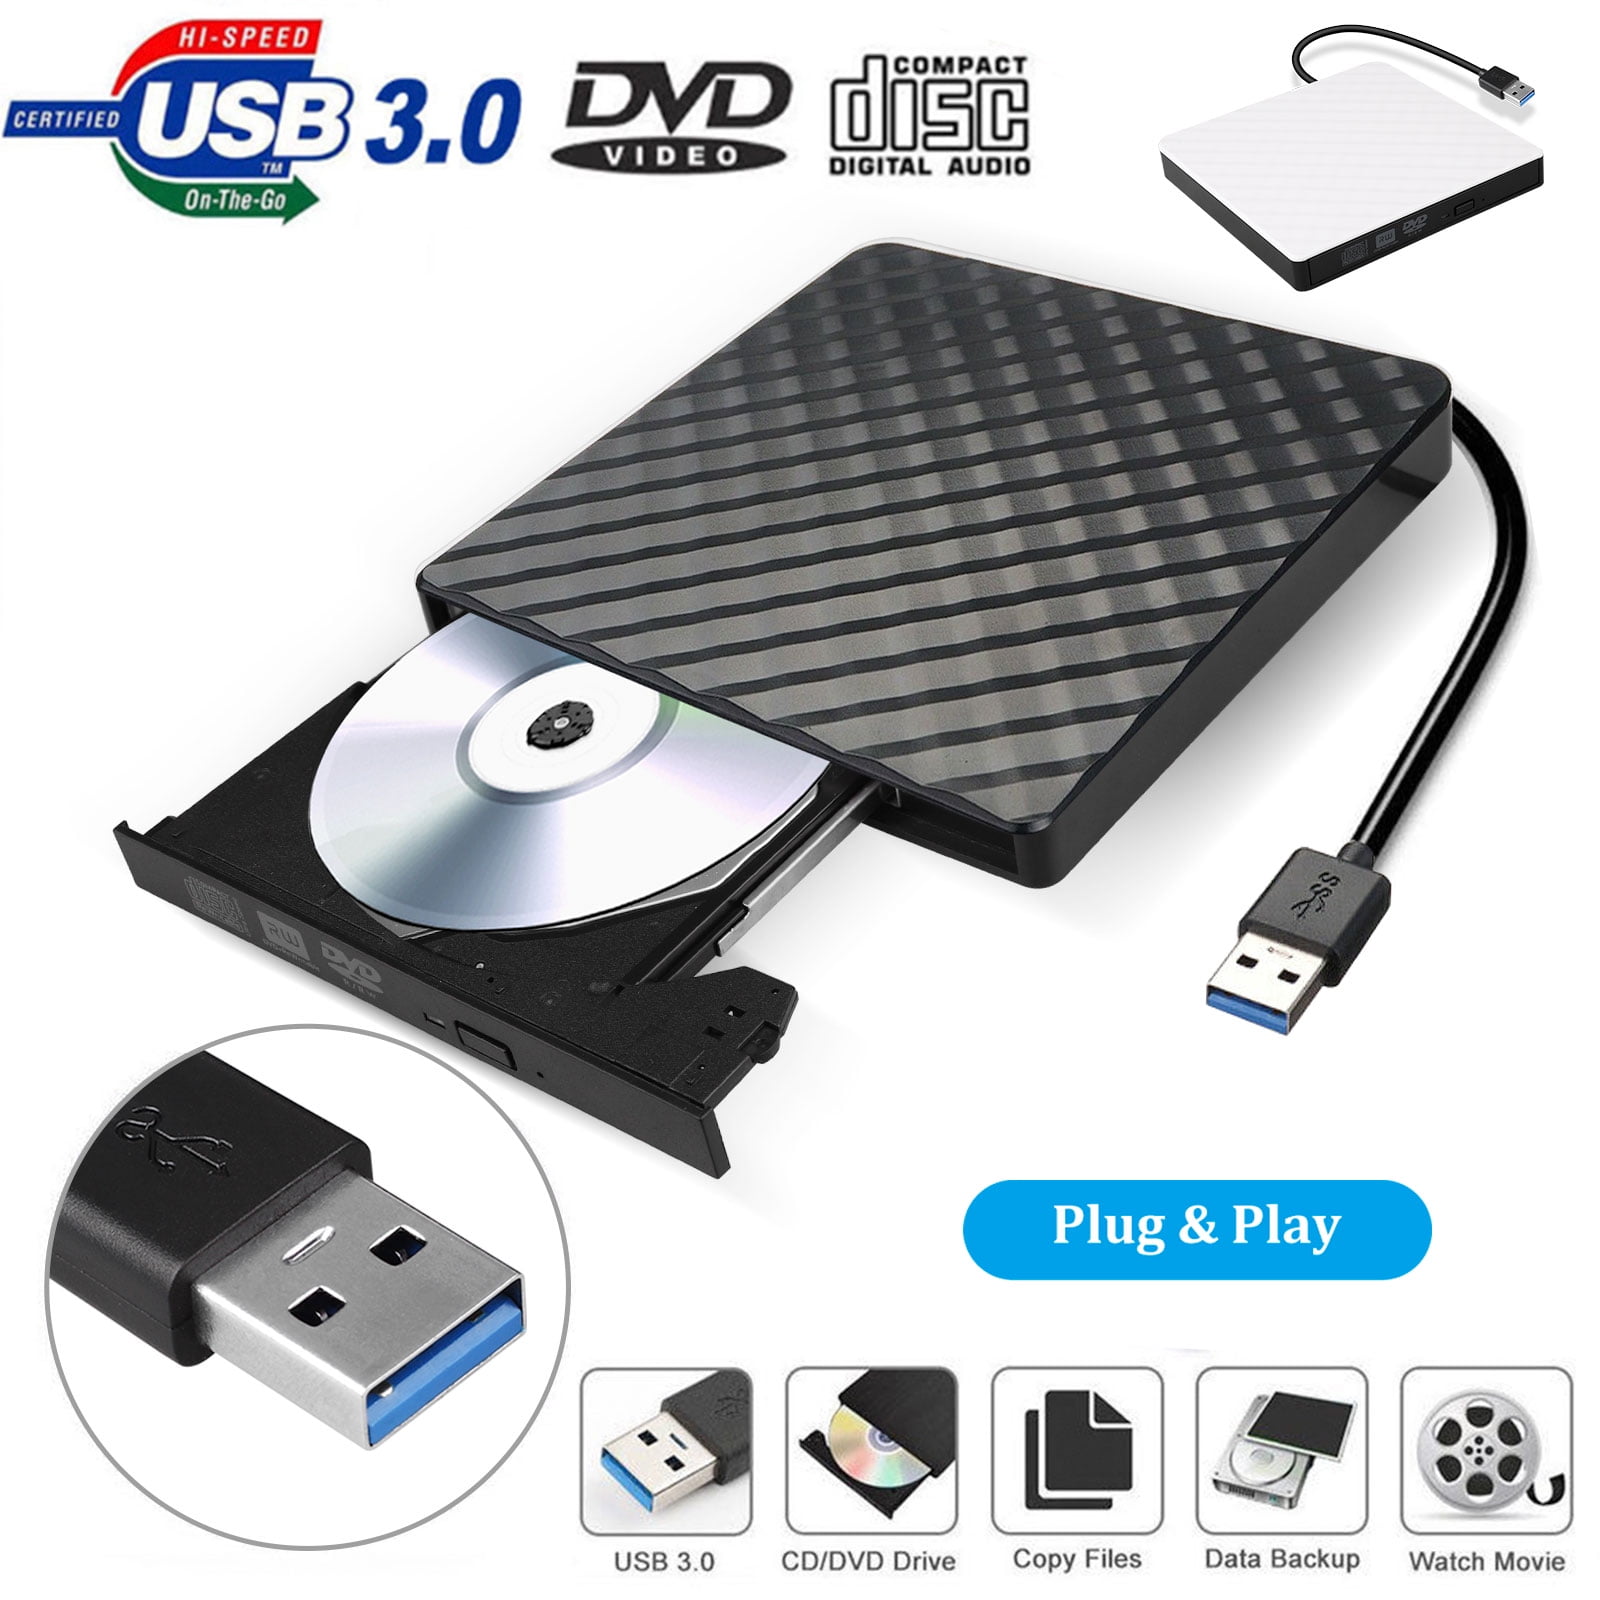 External DVD Drive USB 3.0, EEEkit Portable CD DVD +/-RW Optical Drive Burner Writer for Windows 10/8 / 7 Laptop Desktop Mac MacBook Pro Air iMac HP Dell LG Asus Acer Lenovo Thinkpad, Black